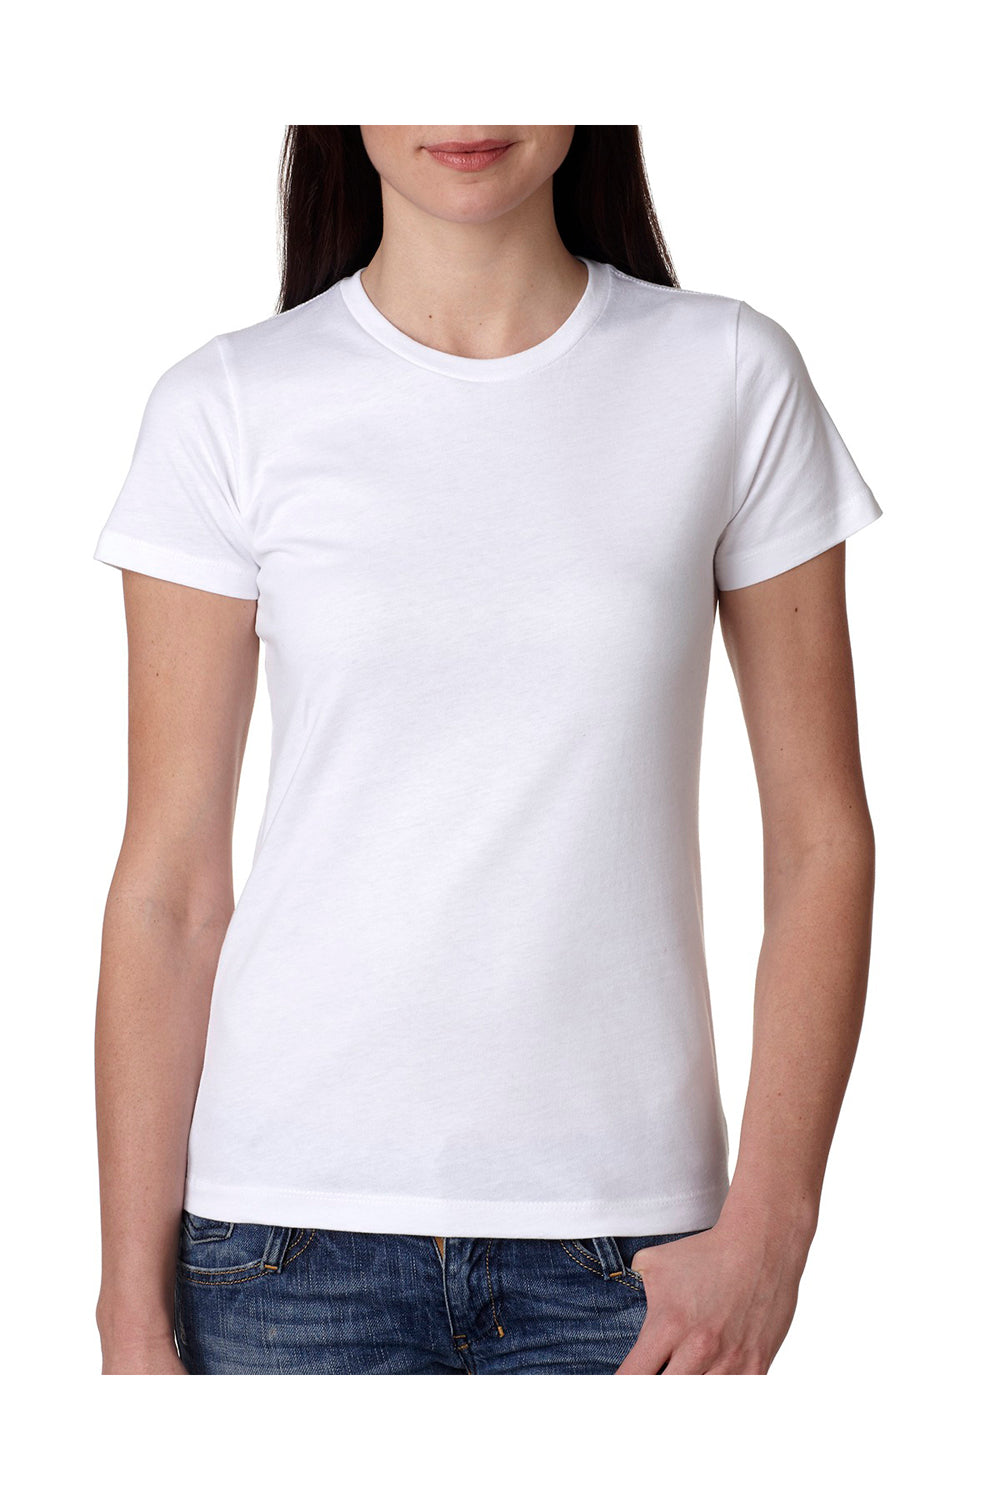 Next Level N3900 Womens Boyfriend Fine Jersey Short Sleeve Crewneck T-Shirt White Front